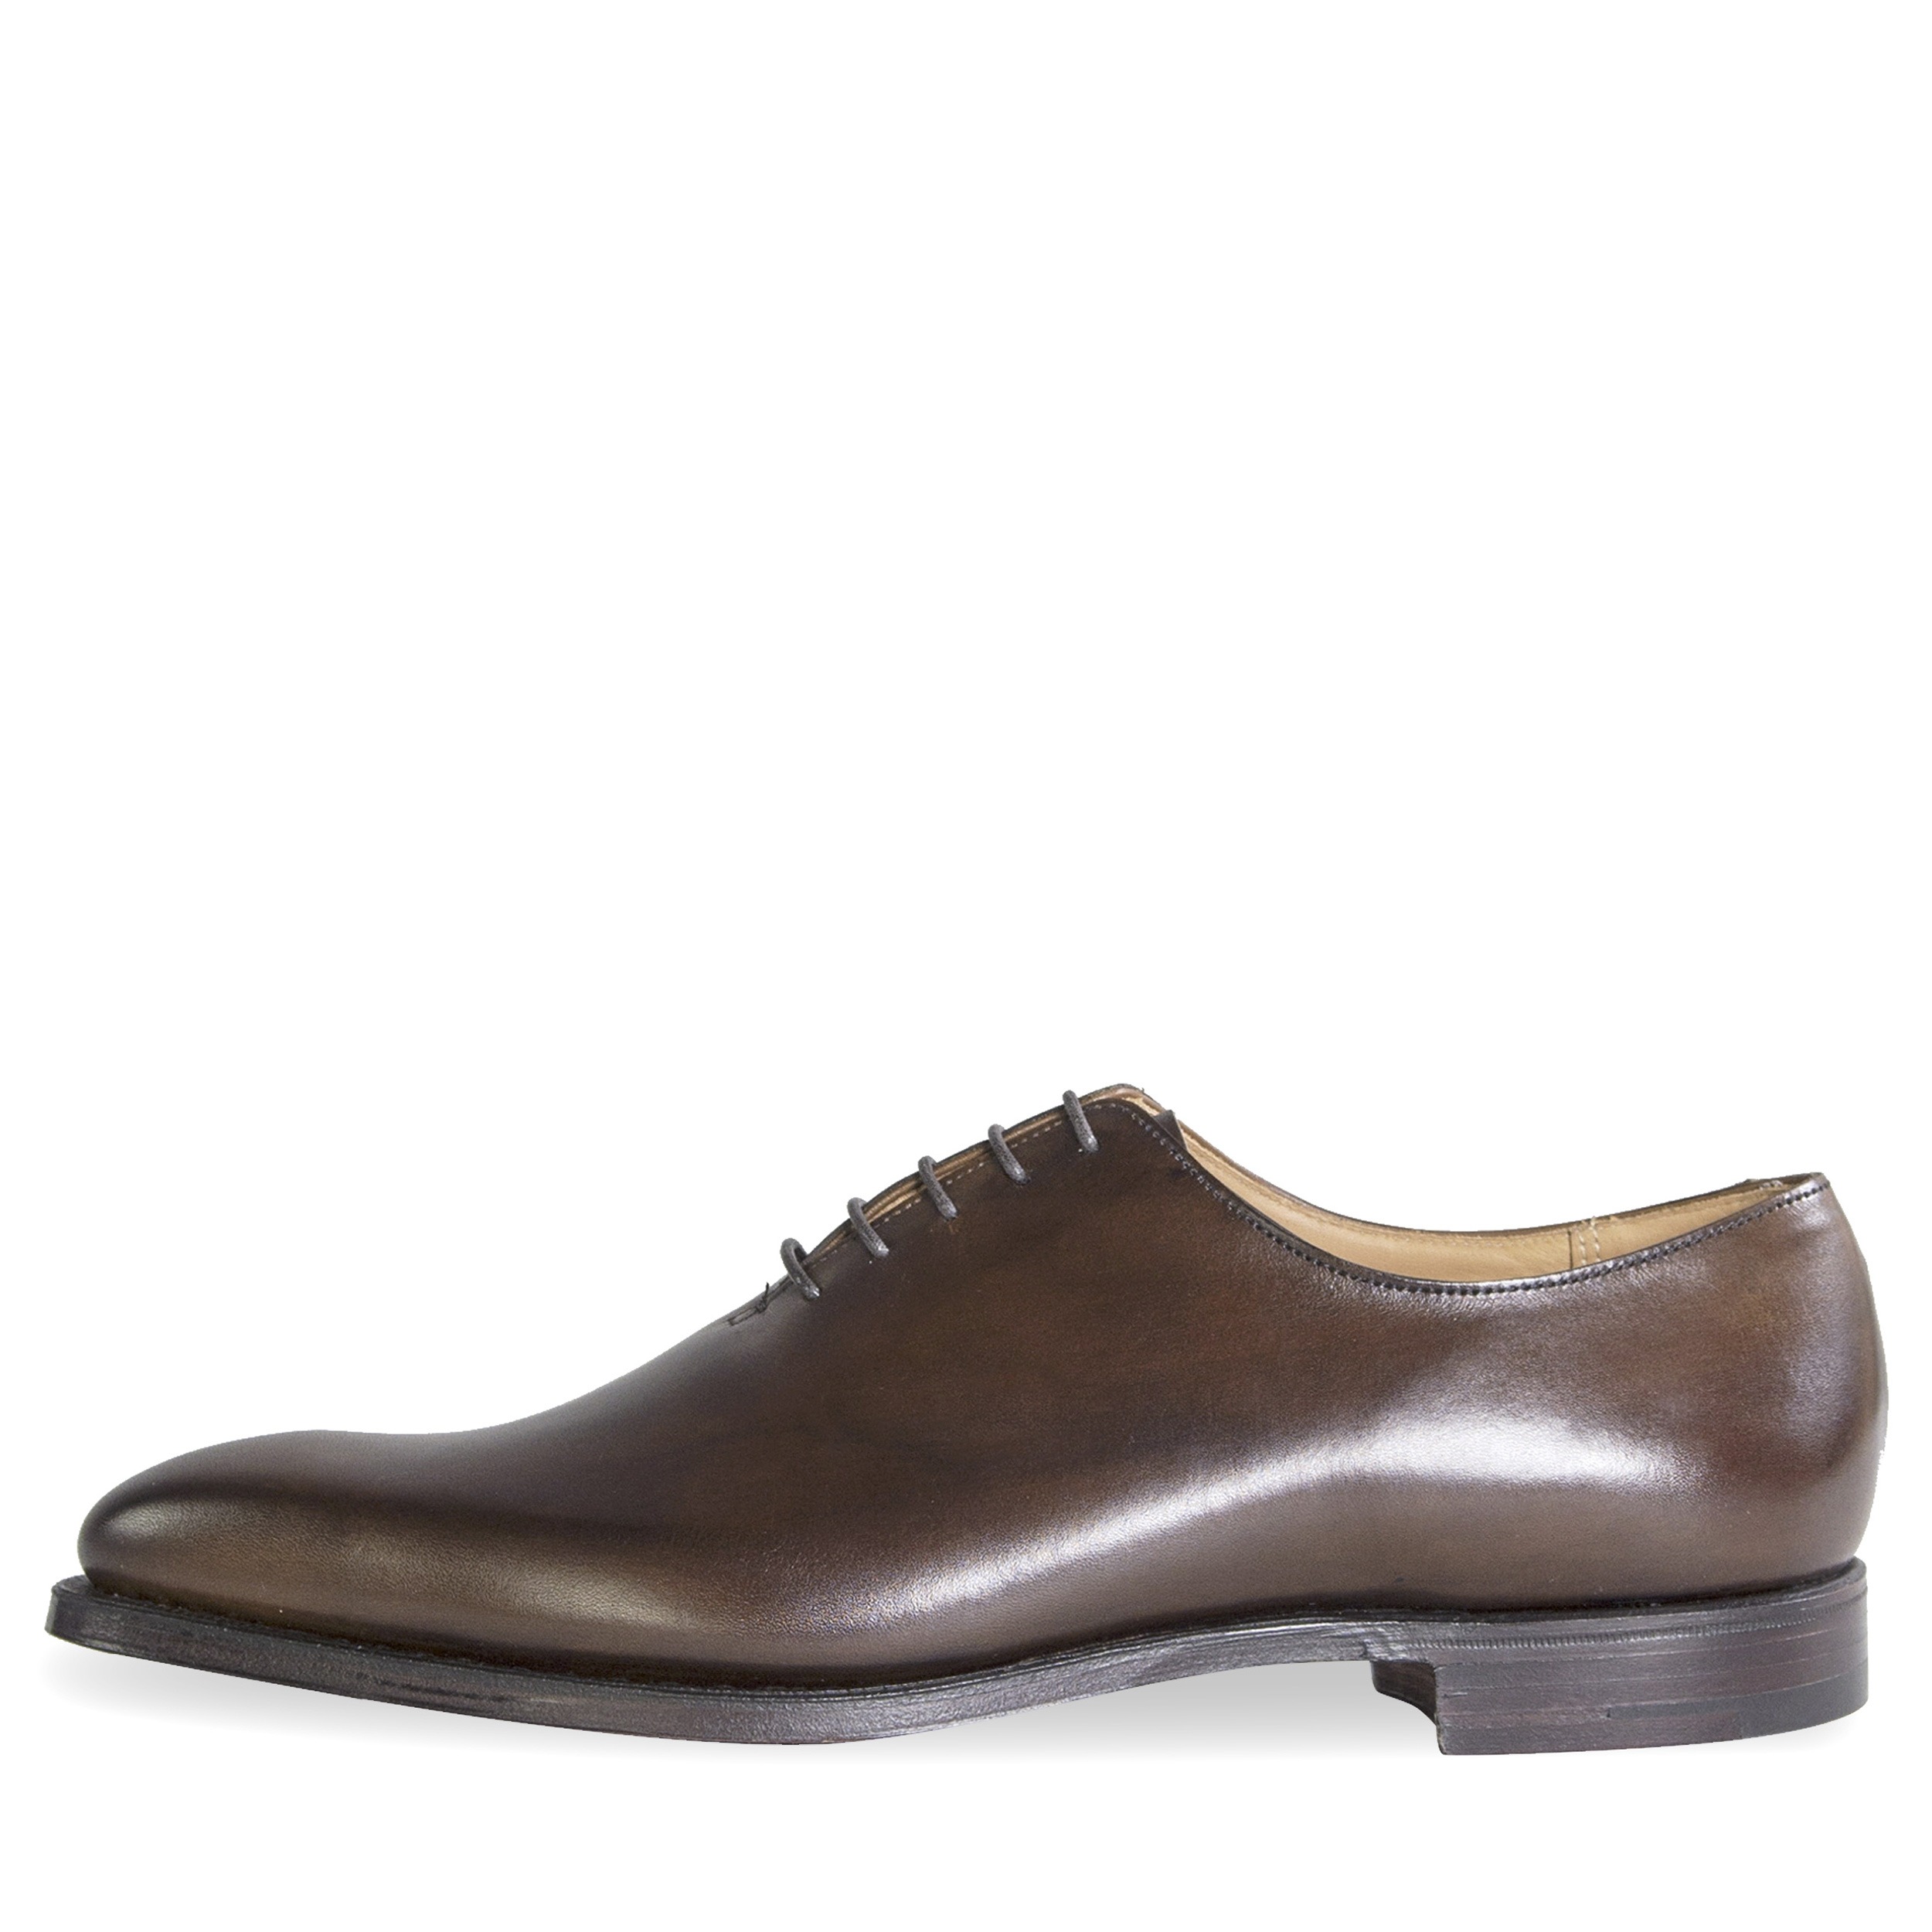 Crockett & Jones ’Alex’ Burnished Calf Leather Shoes Brown